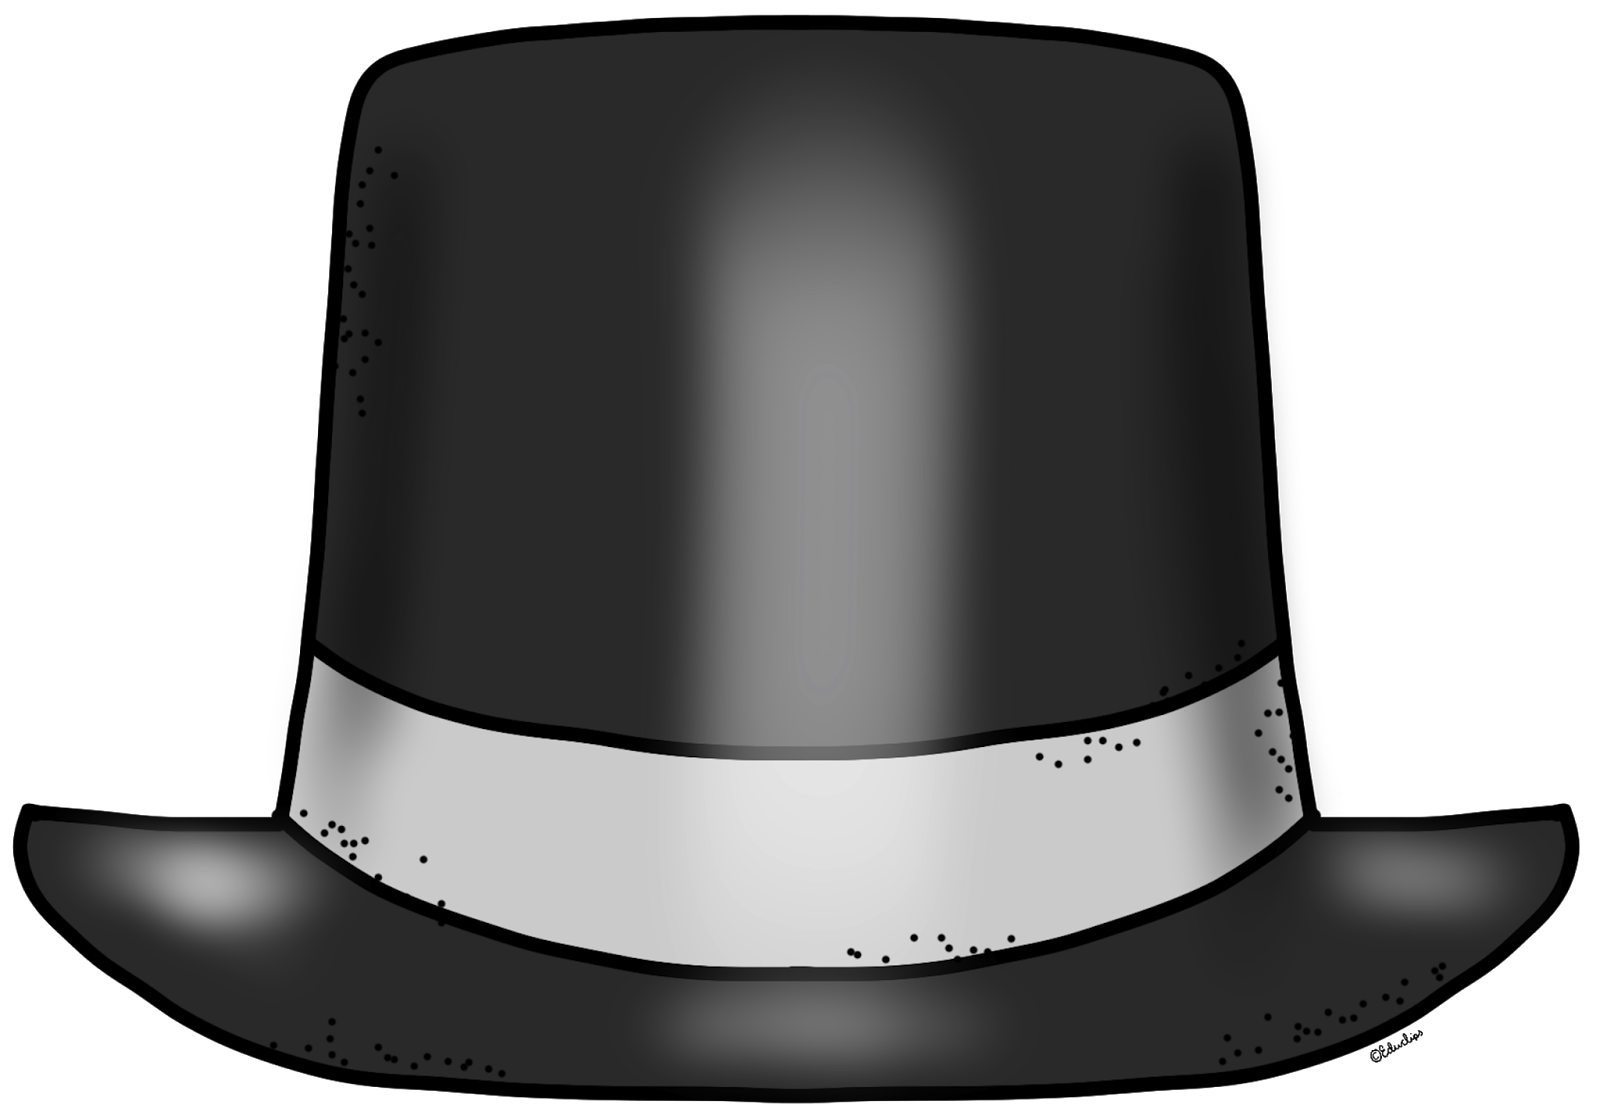 Snowman hat clip art - ClipartFox